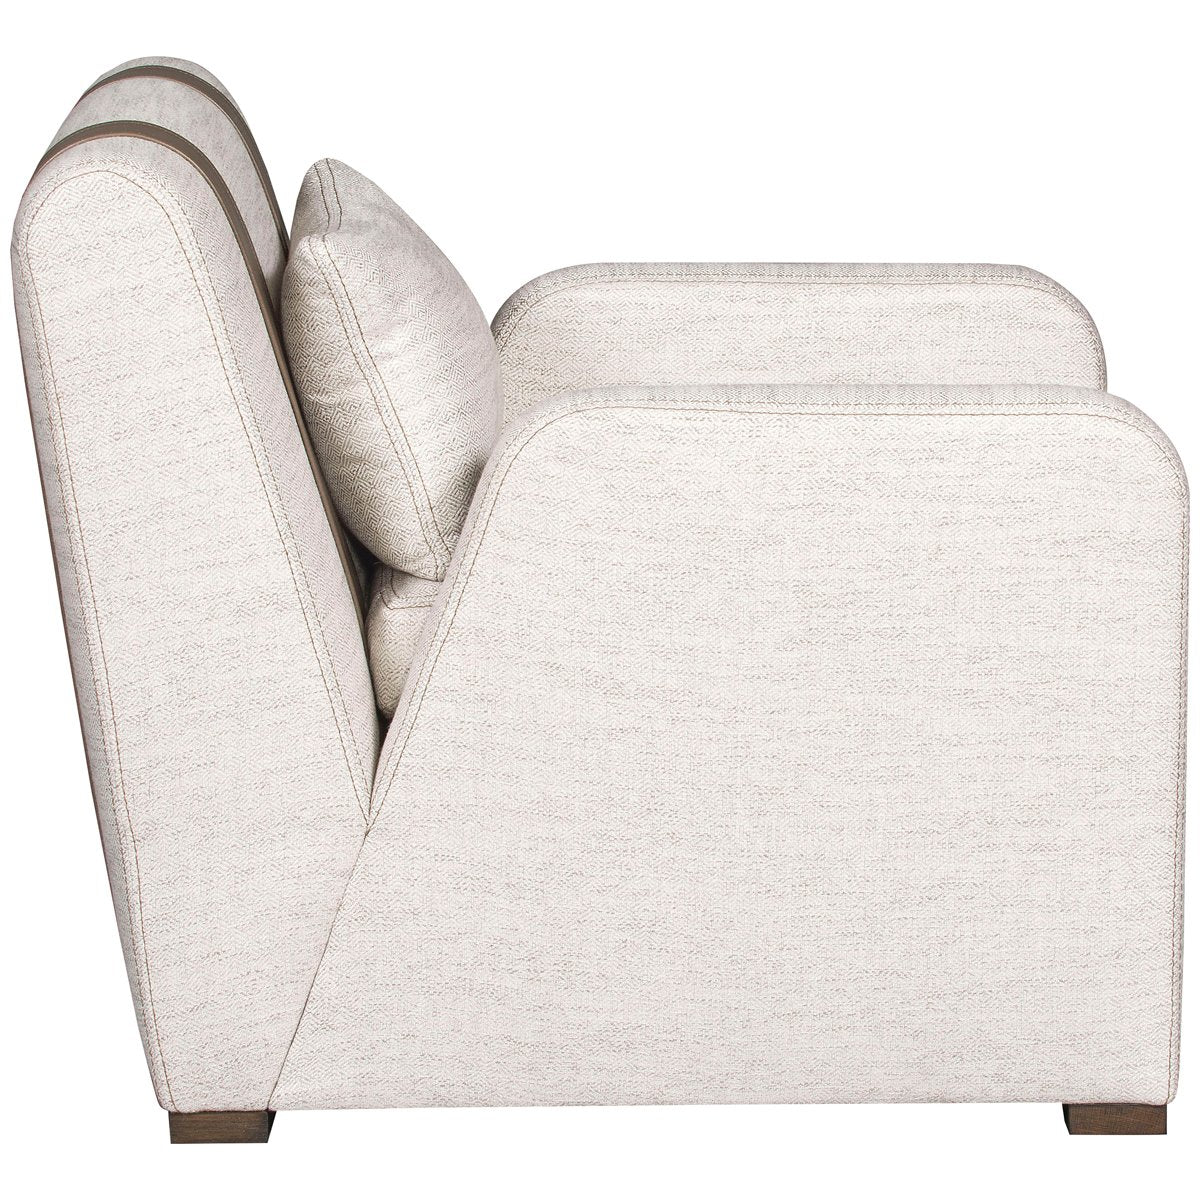 Vanguard Furniture Colvin Chair